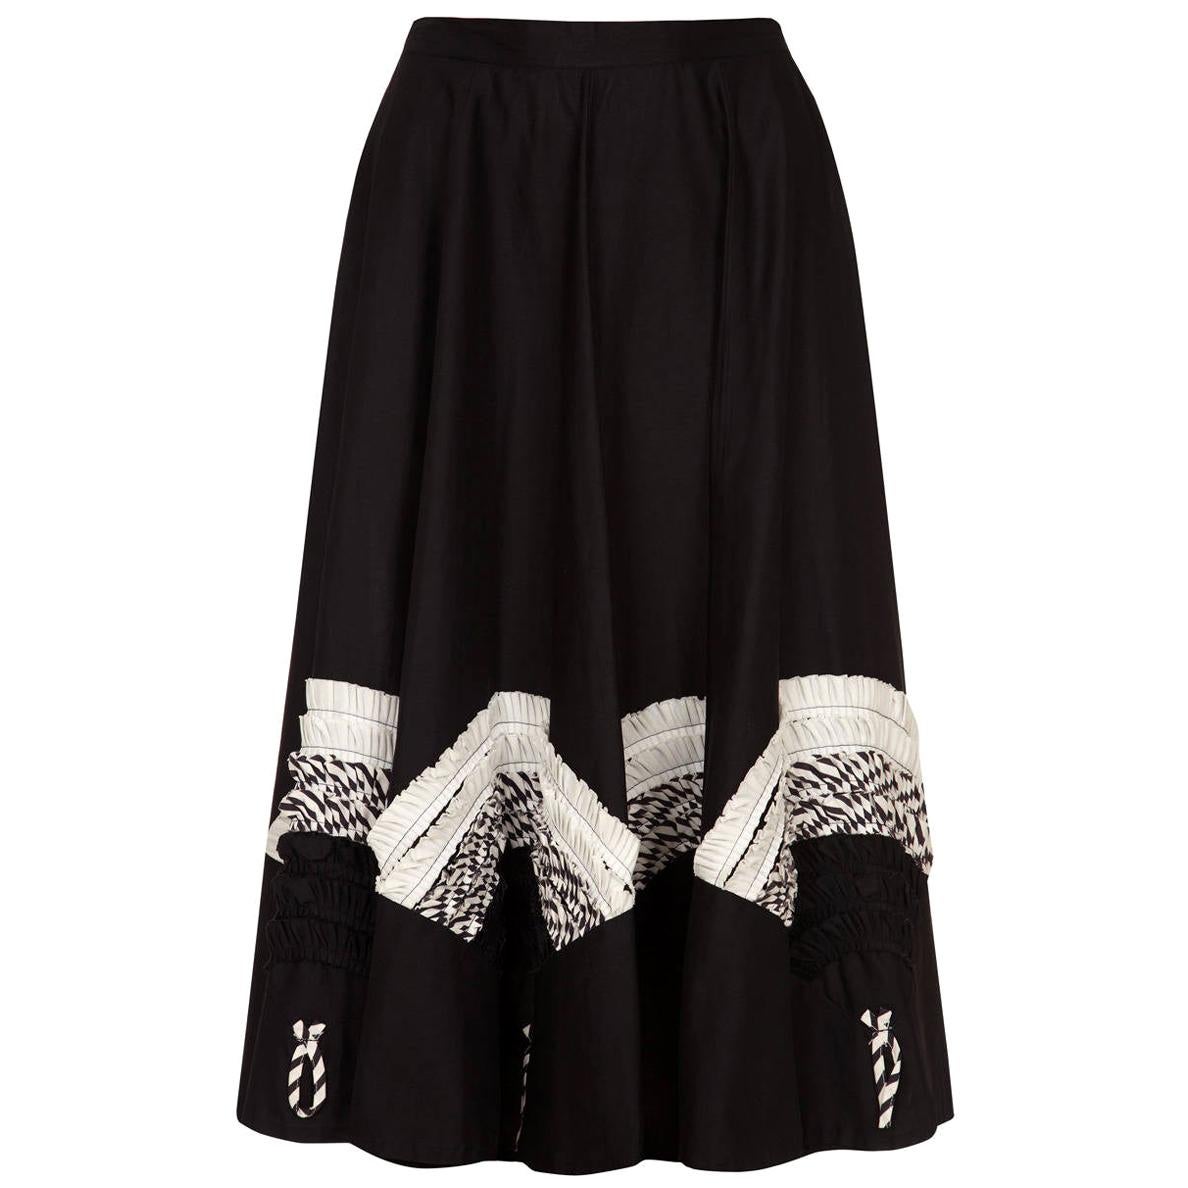 1950s Black Circle Skirt With Monochrome Applique Detail For Sale